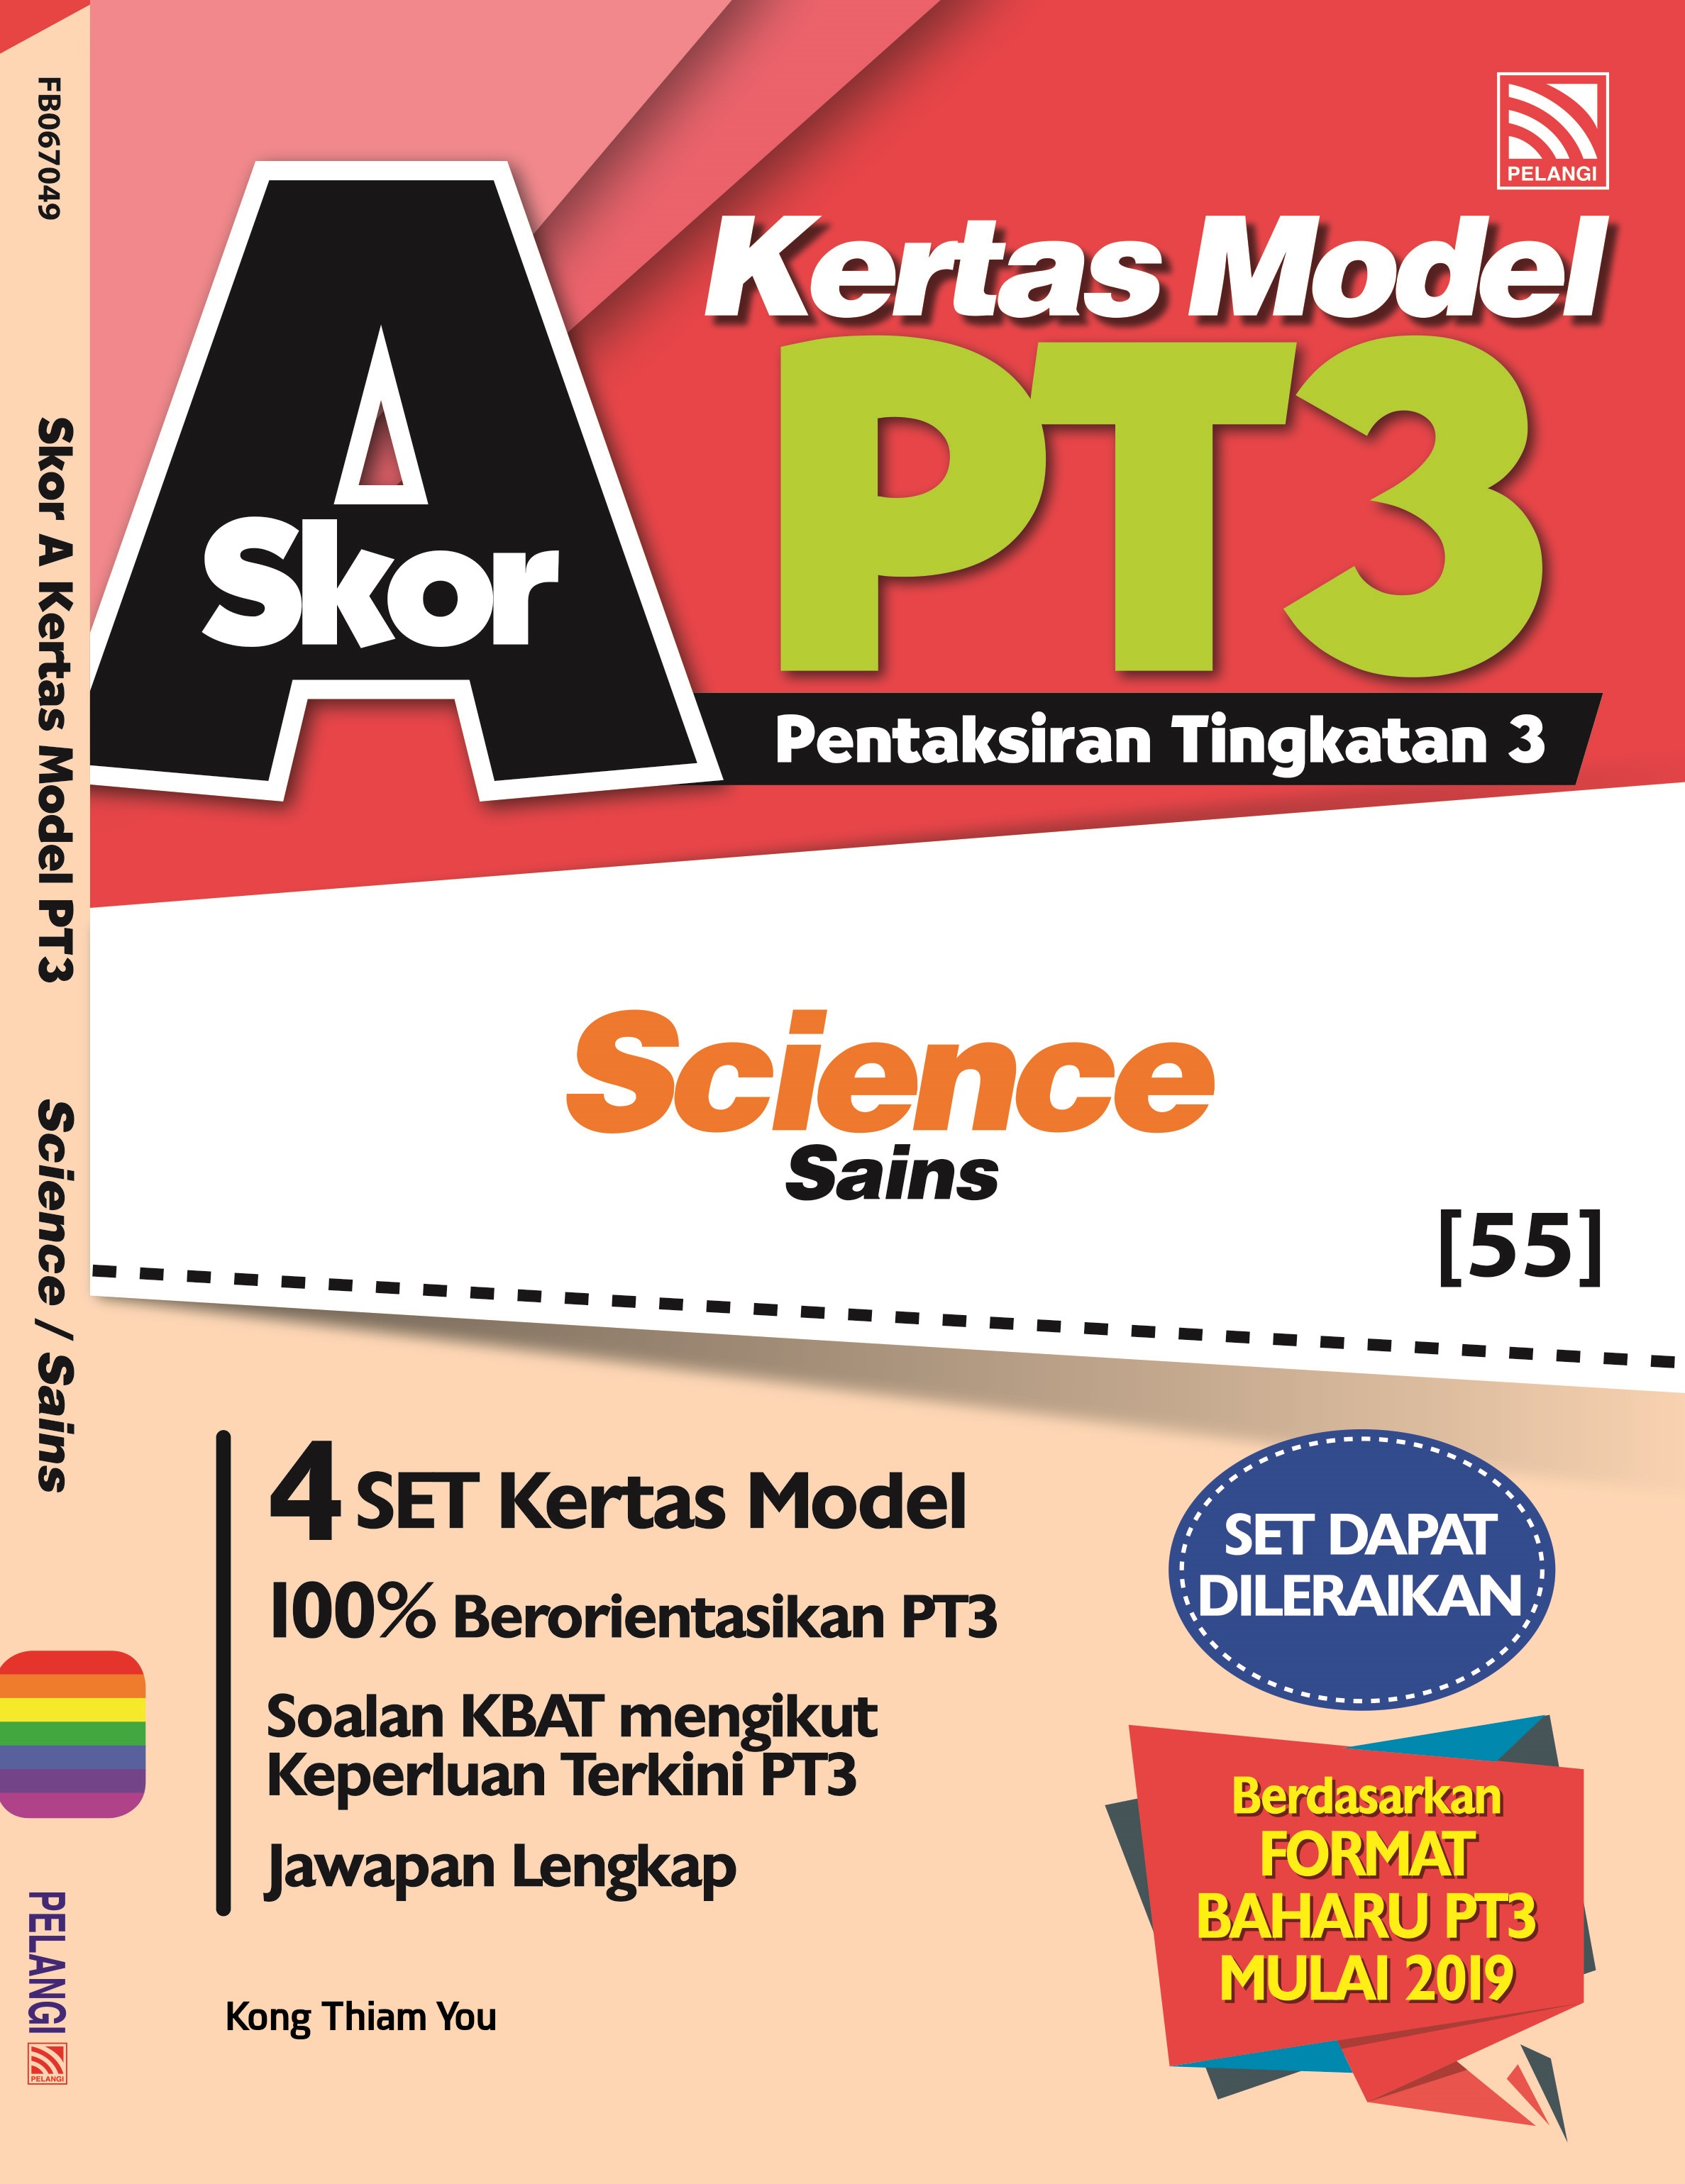 Skor A Kertas Model Pt3 2019 Science